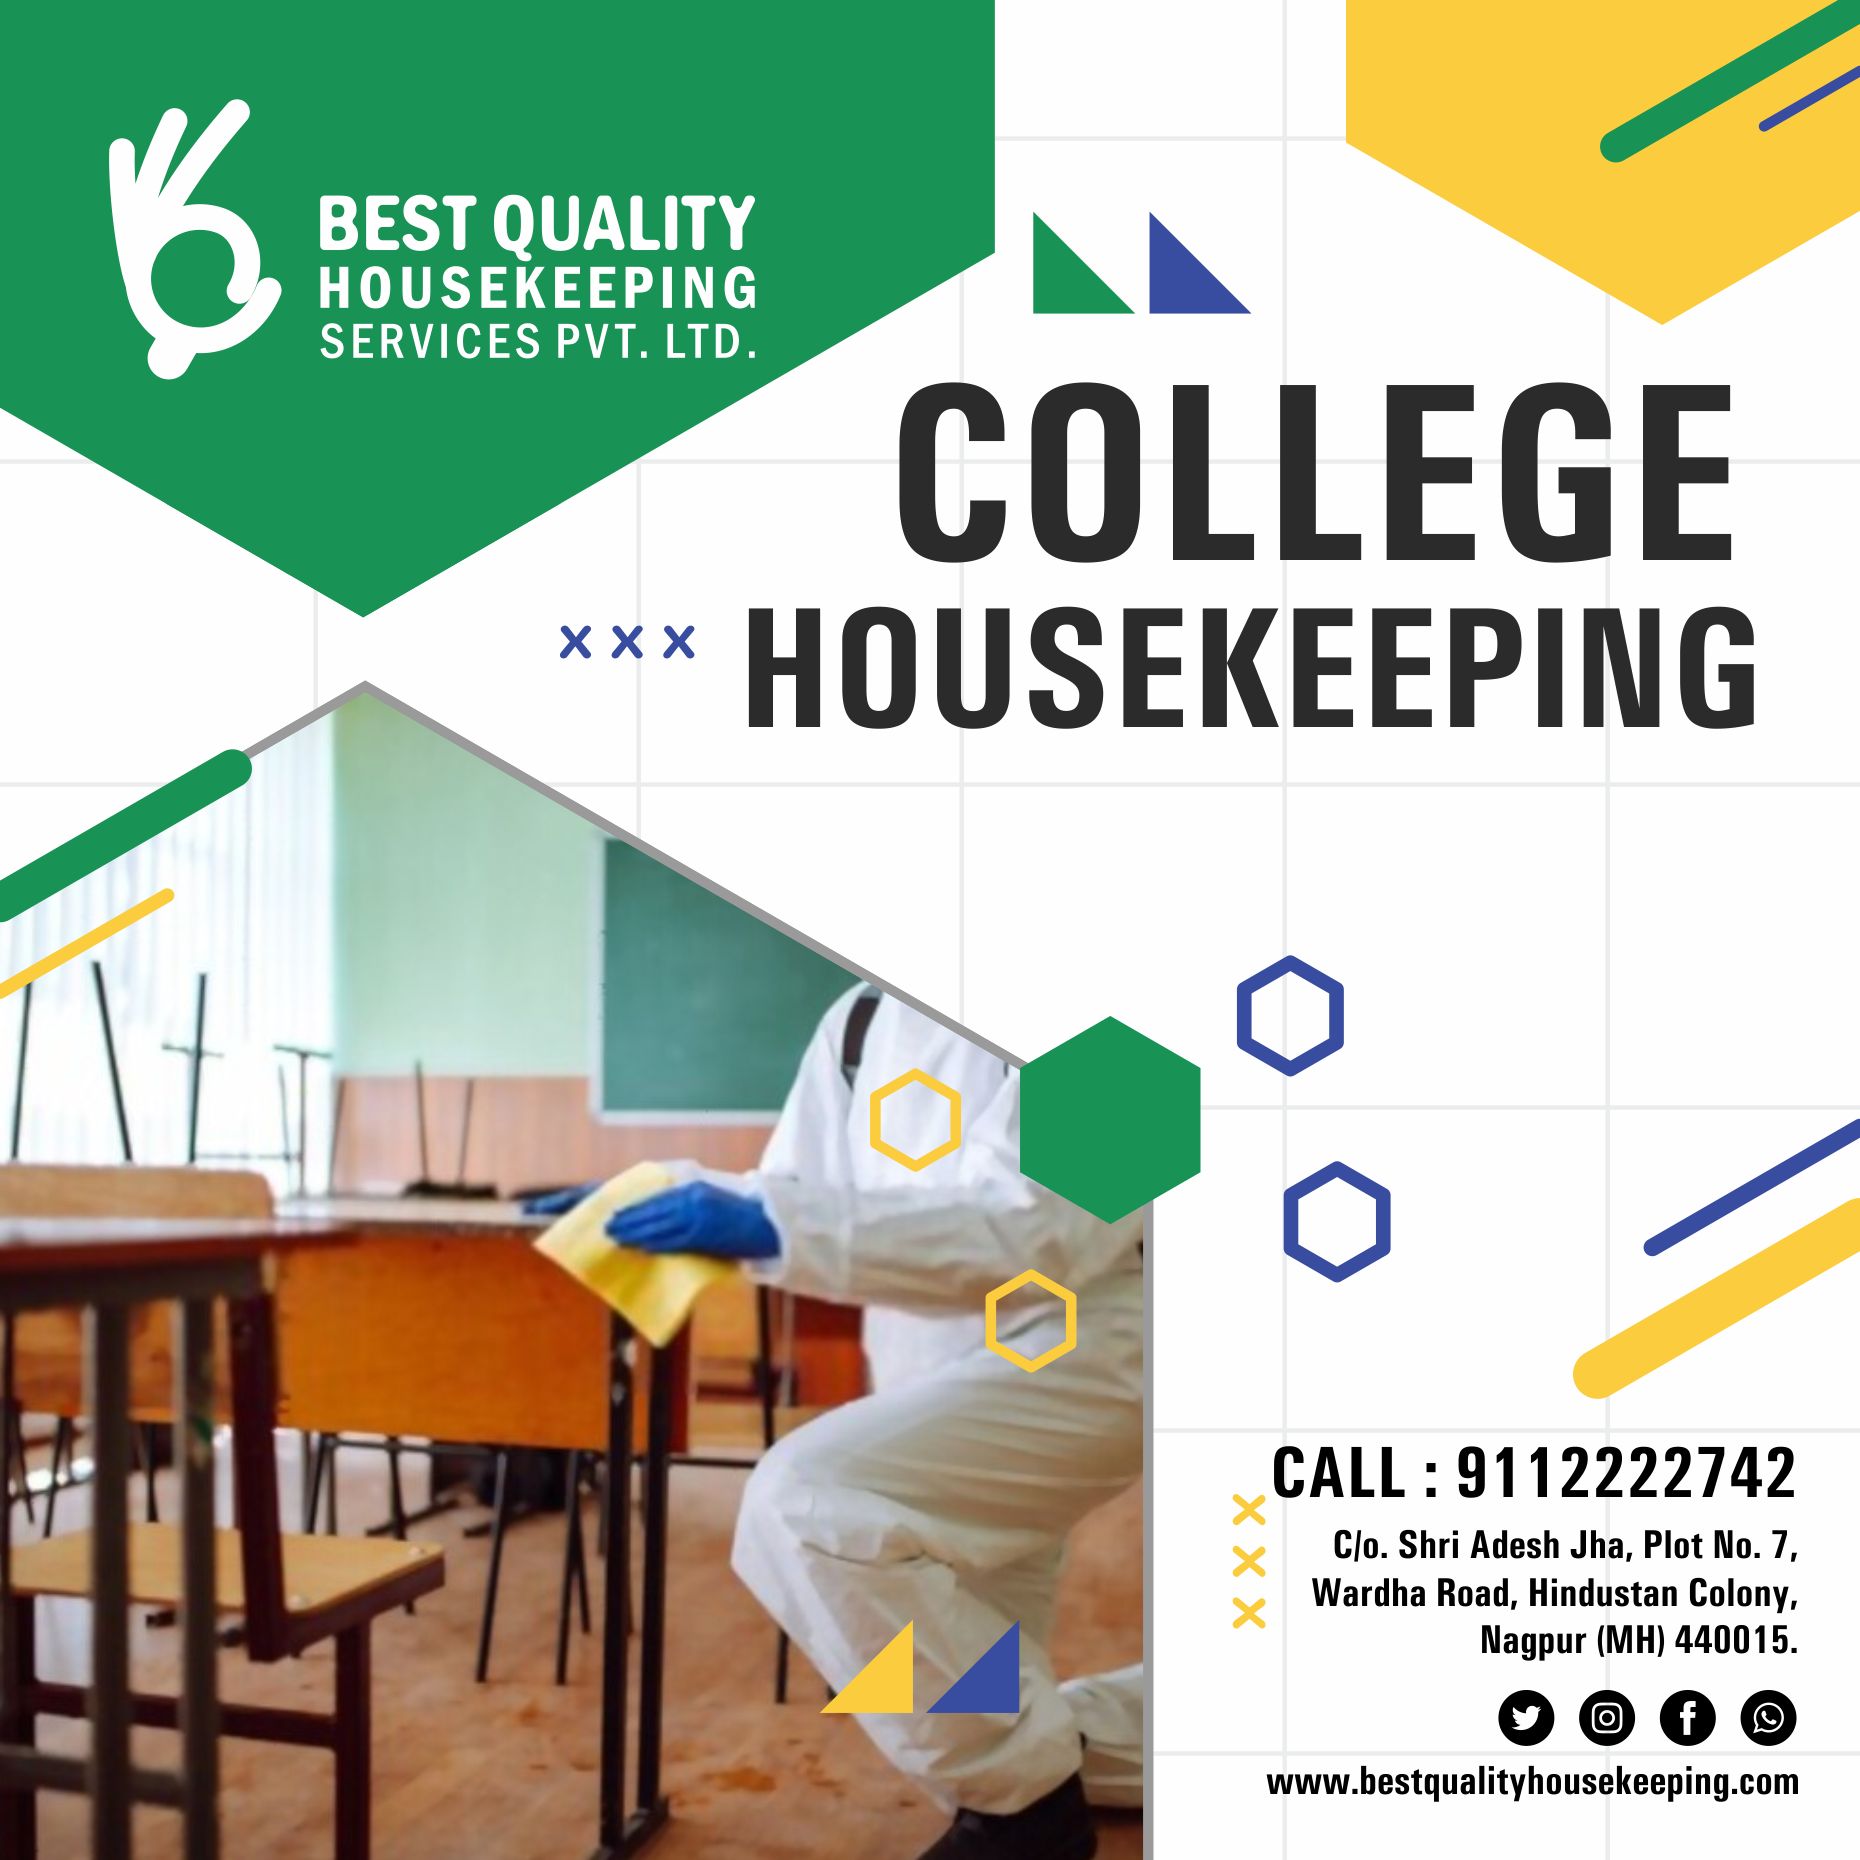 College Housekeeping Services In Nagpur India - besthousekeepingindia